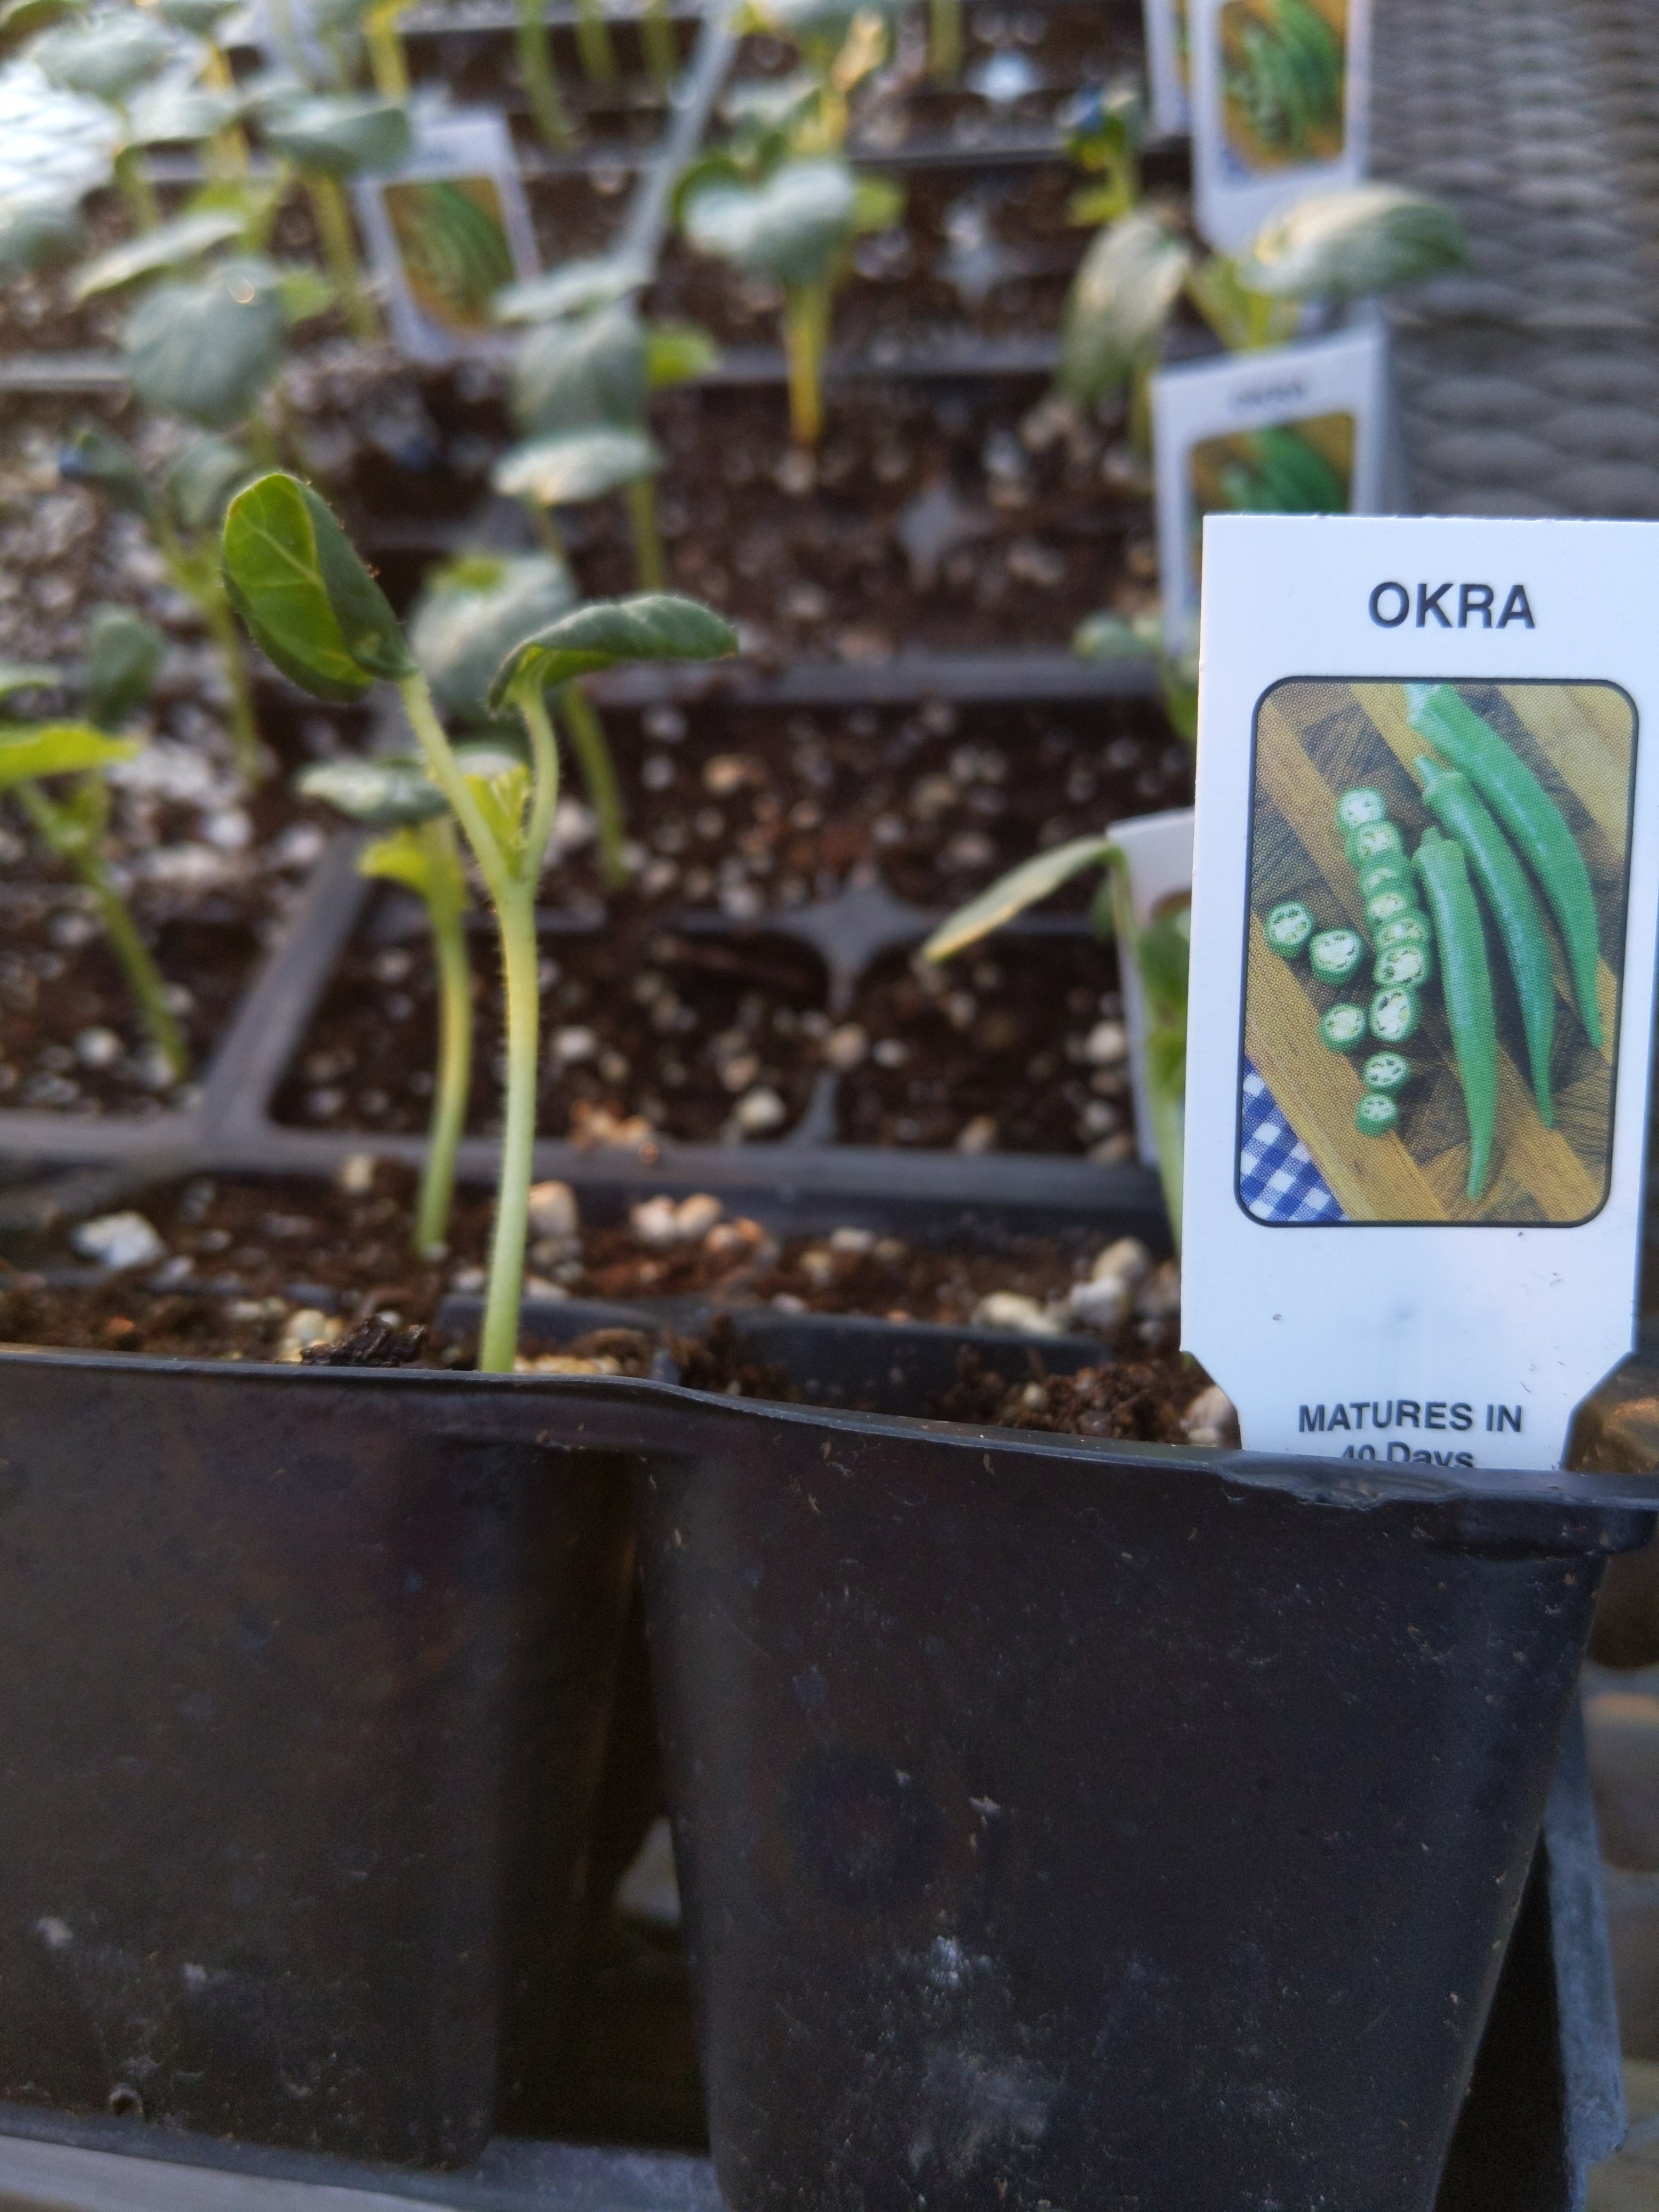 Okra plants